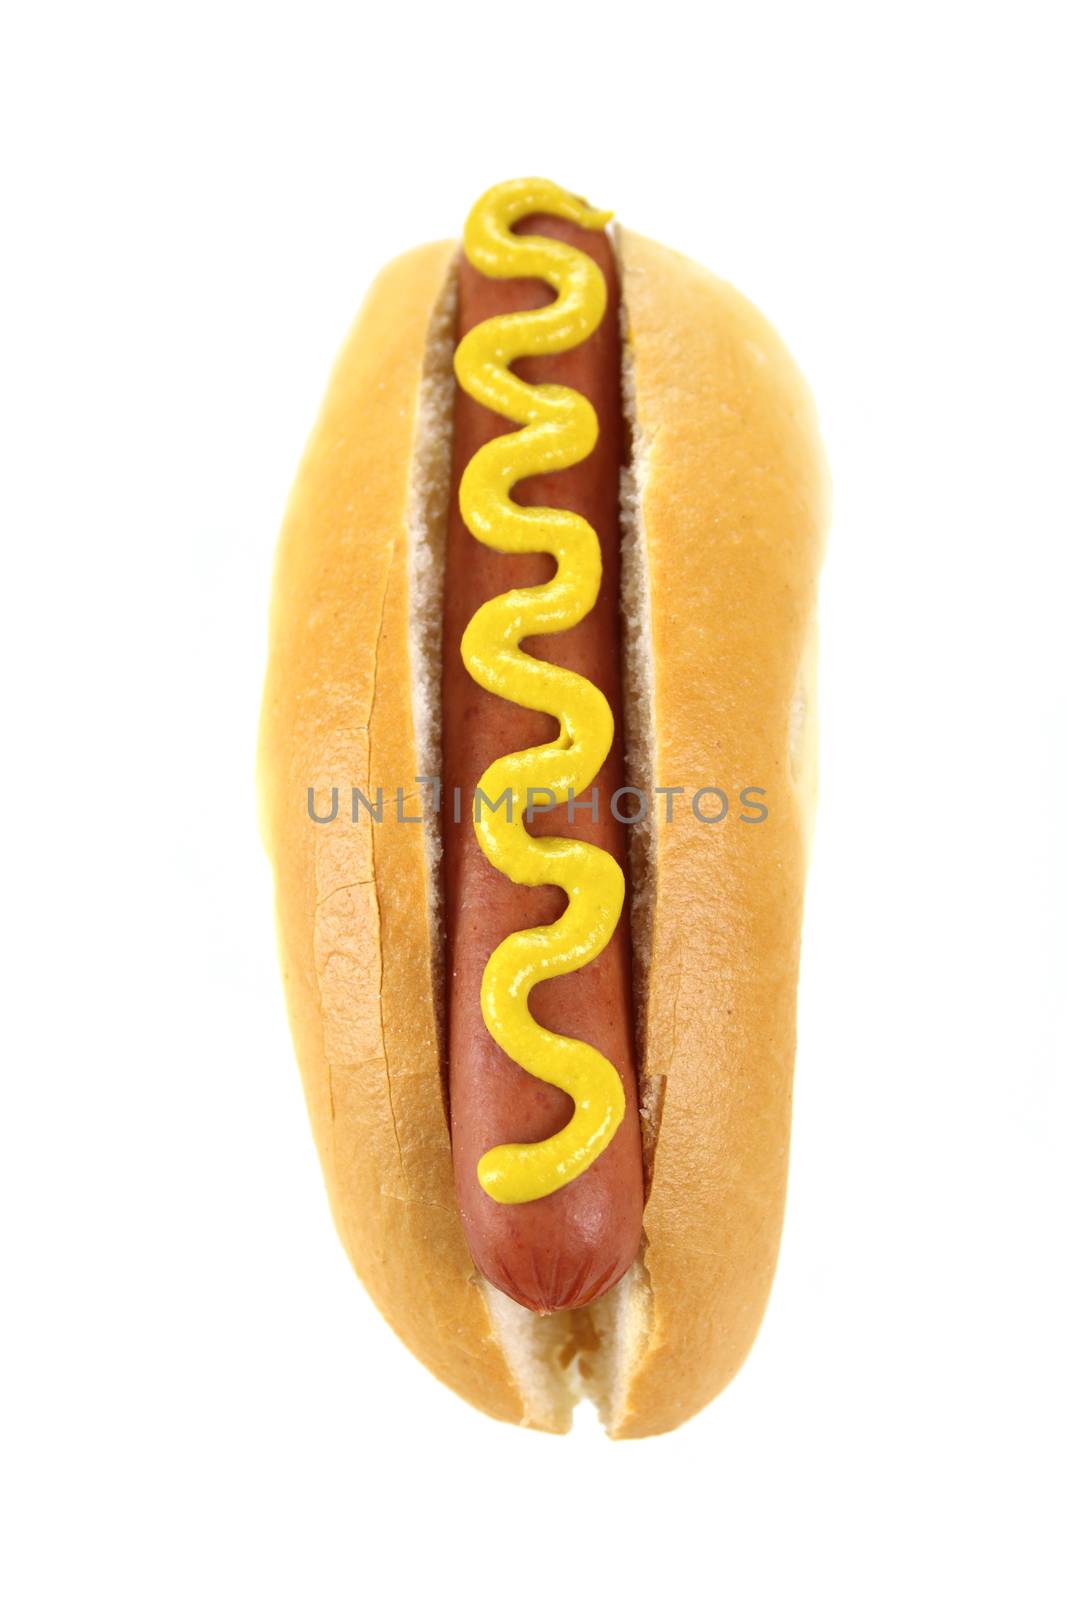 Hot Dog by jabiru